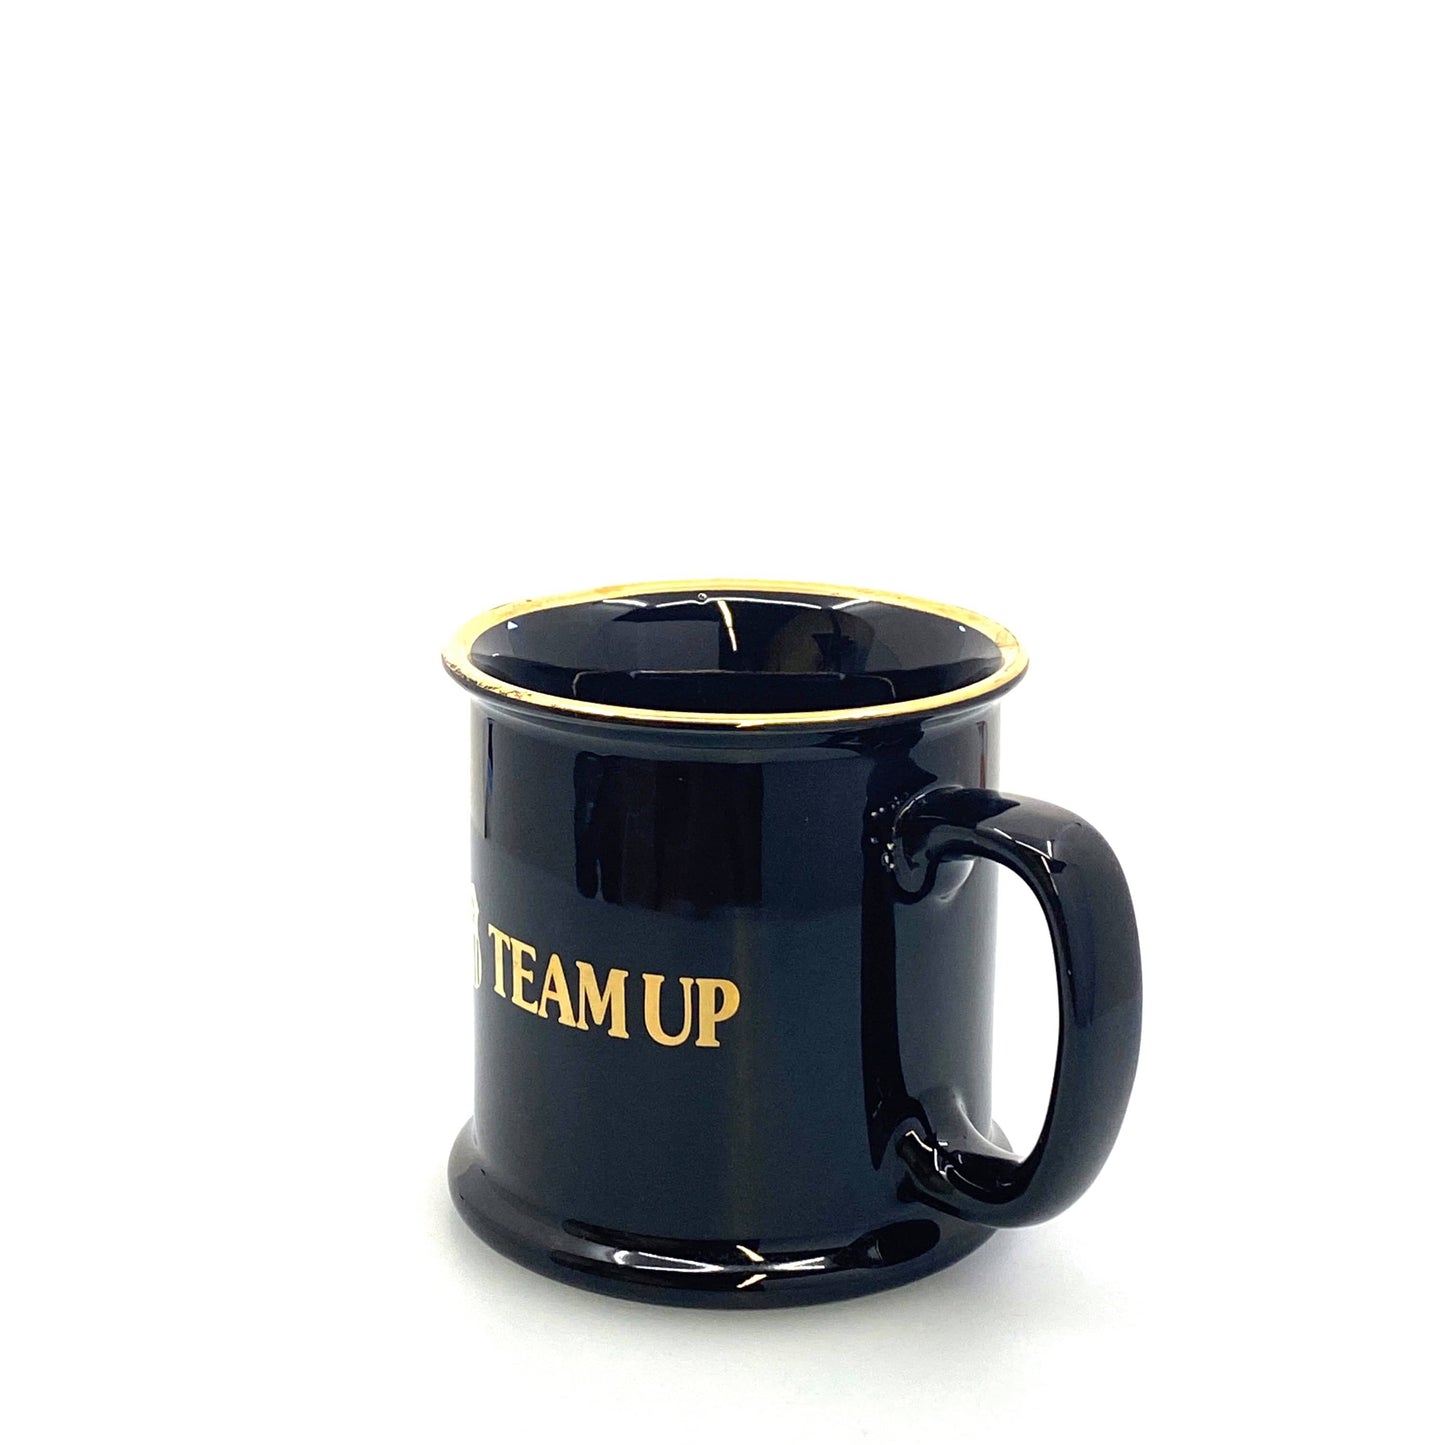 Union Pacific Railroad “Team Up” Employee Goldtone Blue Ceramic Coffee Cup 12 Fl Oz